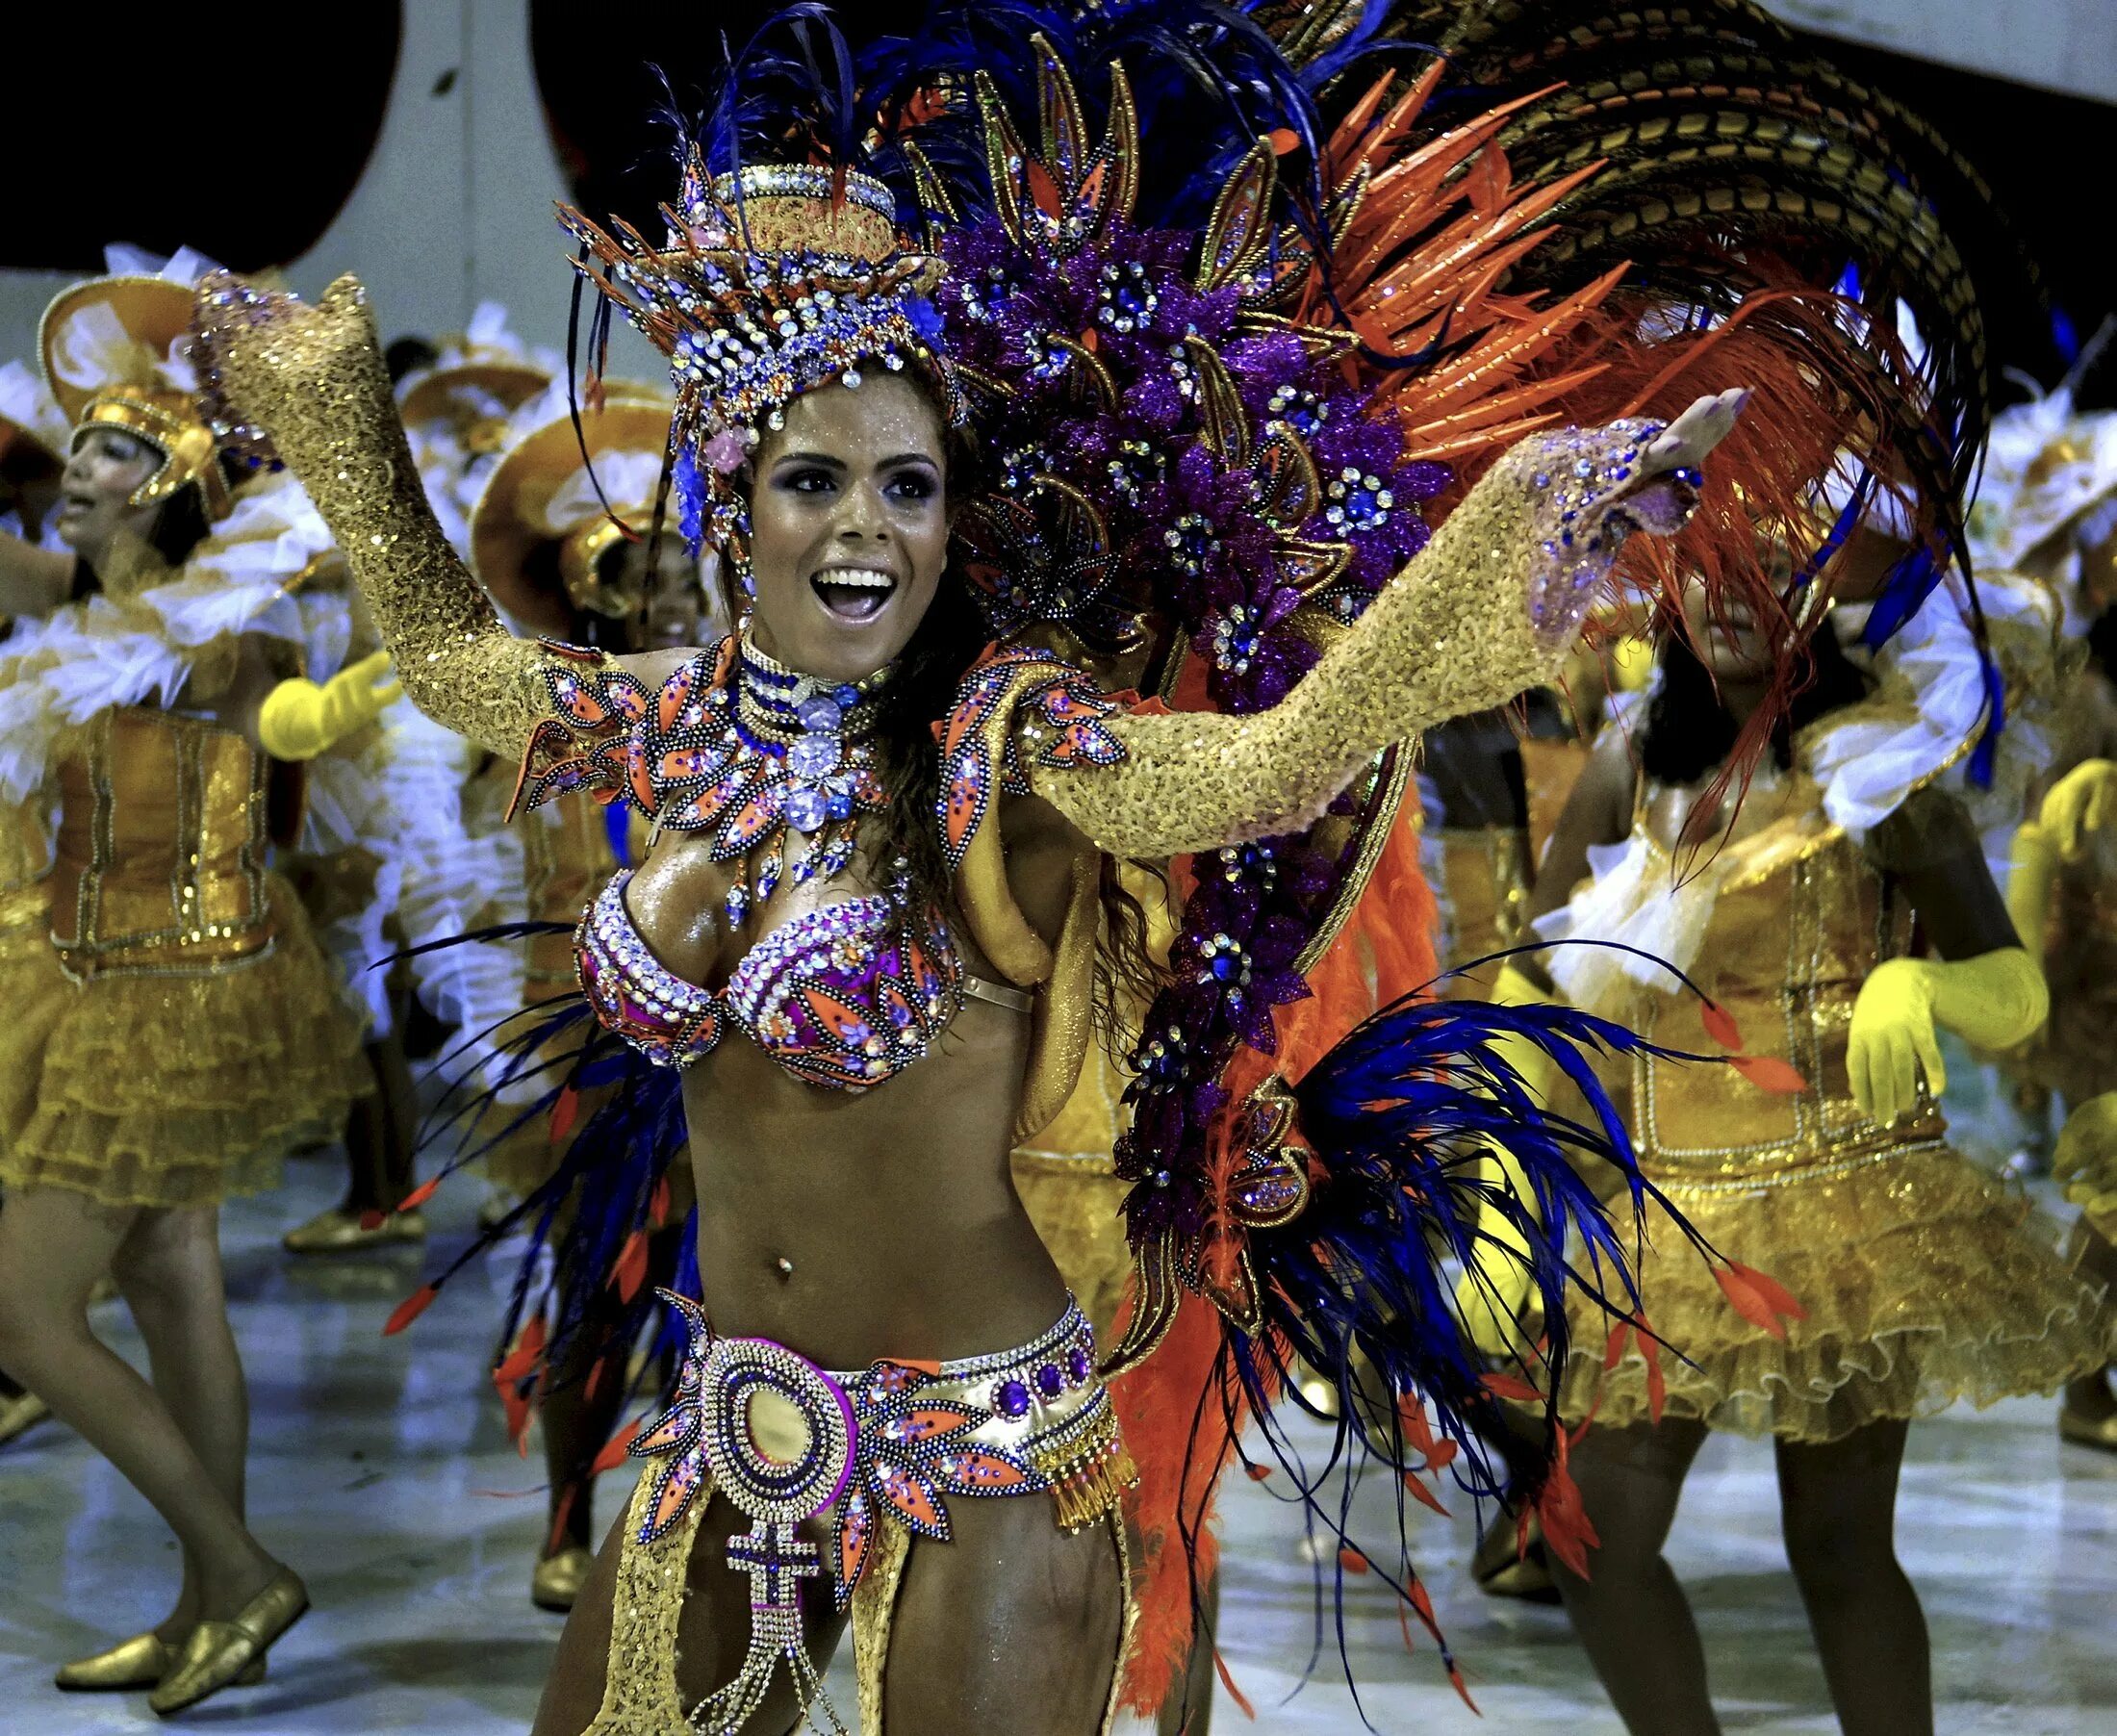 Carnival. Бразильский карнавал в Рио-де-Жанейро. Карнавал в Рио-де-Жанейро (бразильский карнавал). Карнавал Рио де Жанейро Samba. Самба Бразилия Рио де Жанейро.